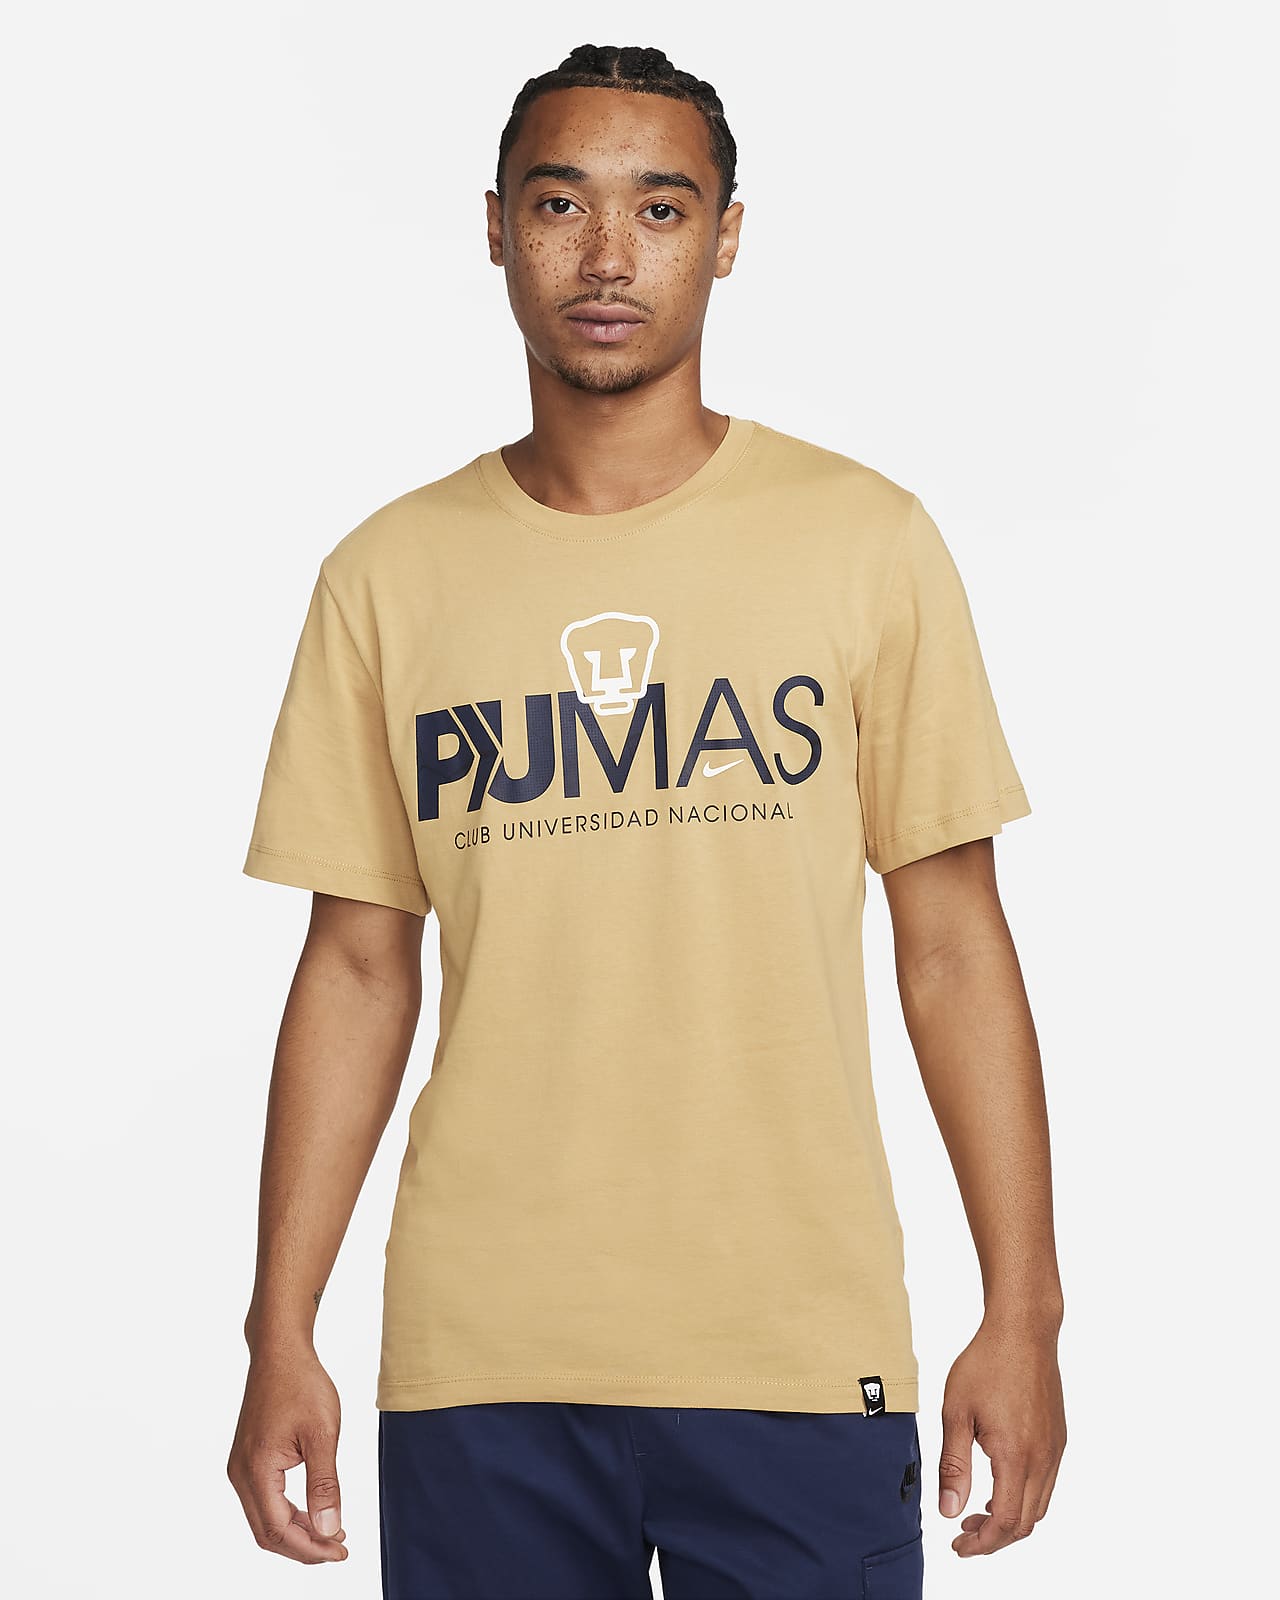 Pumas UNAM Mercurial Men's Nike Soccer T-Shirt